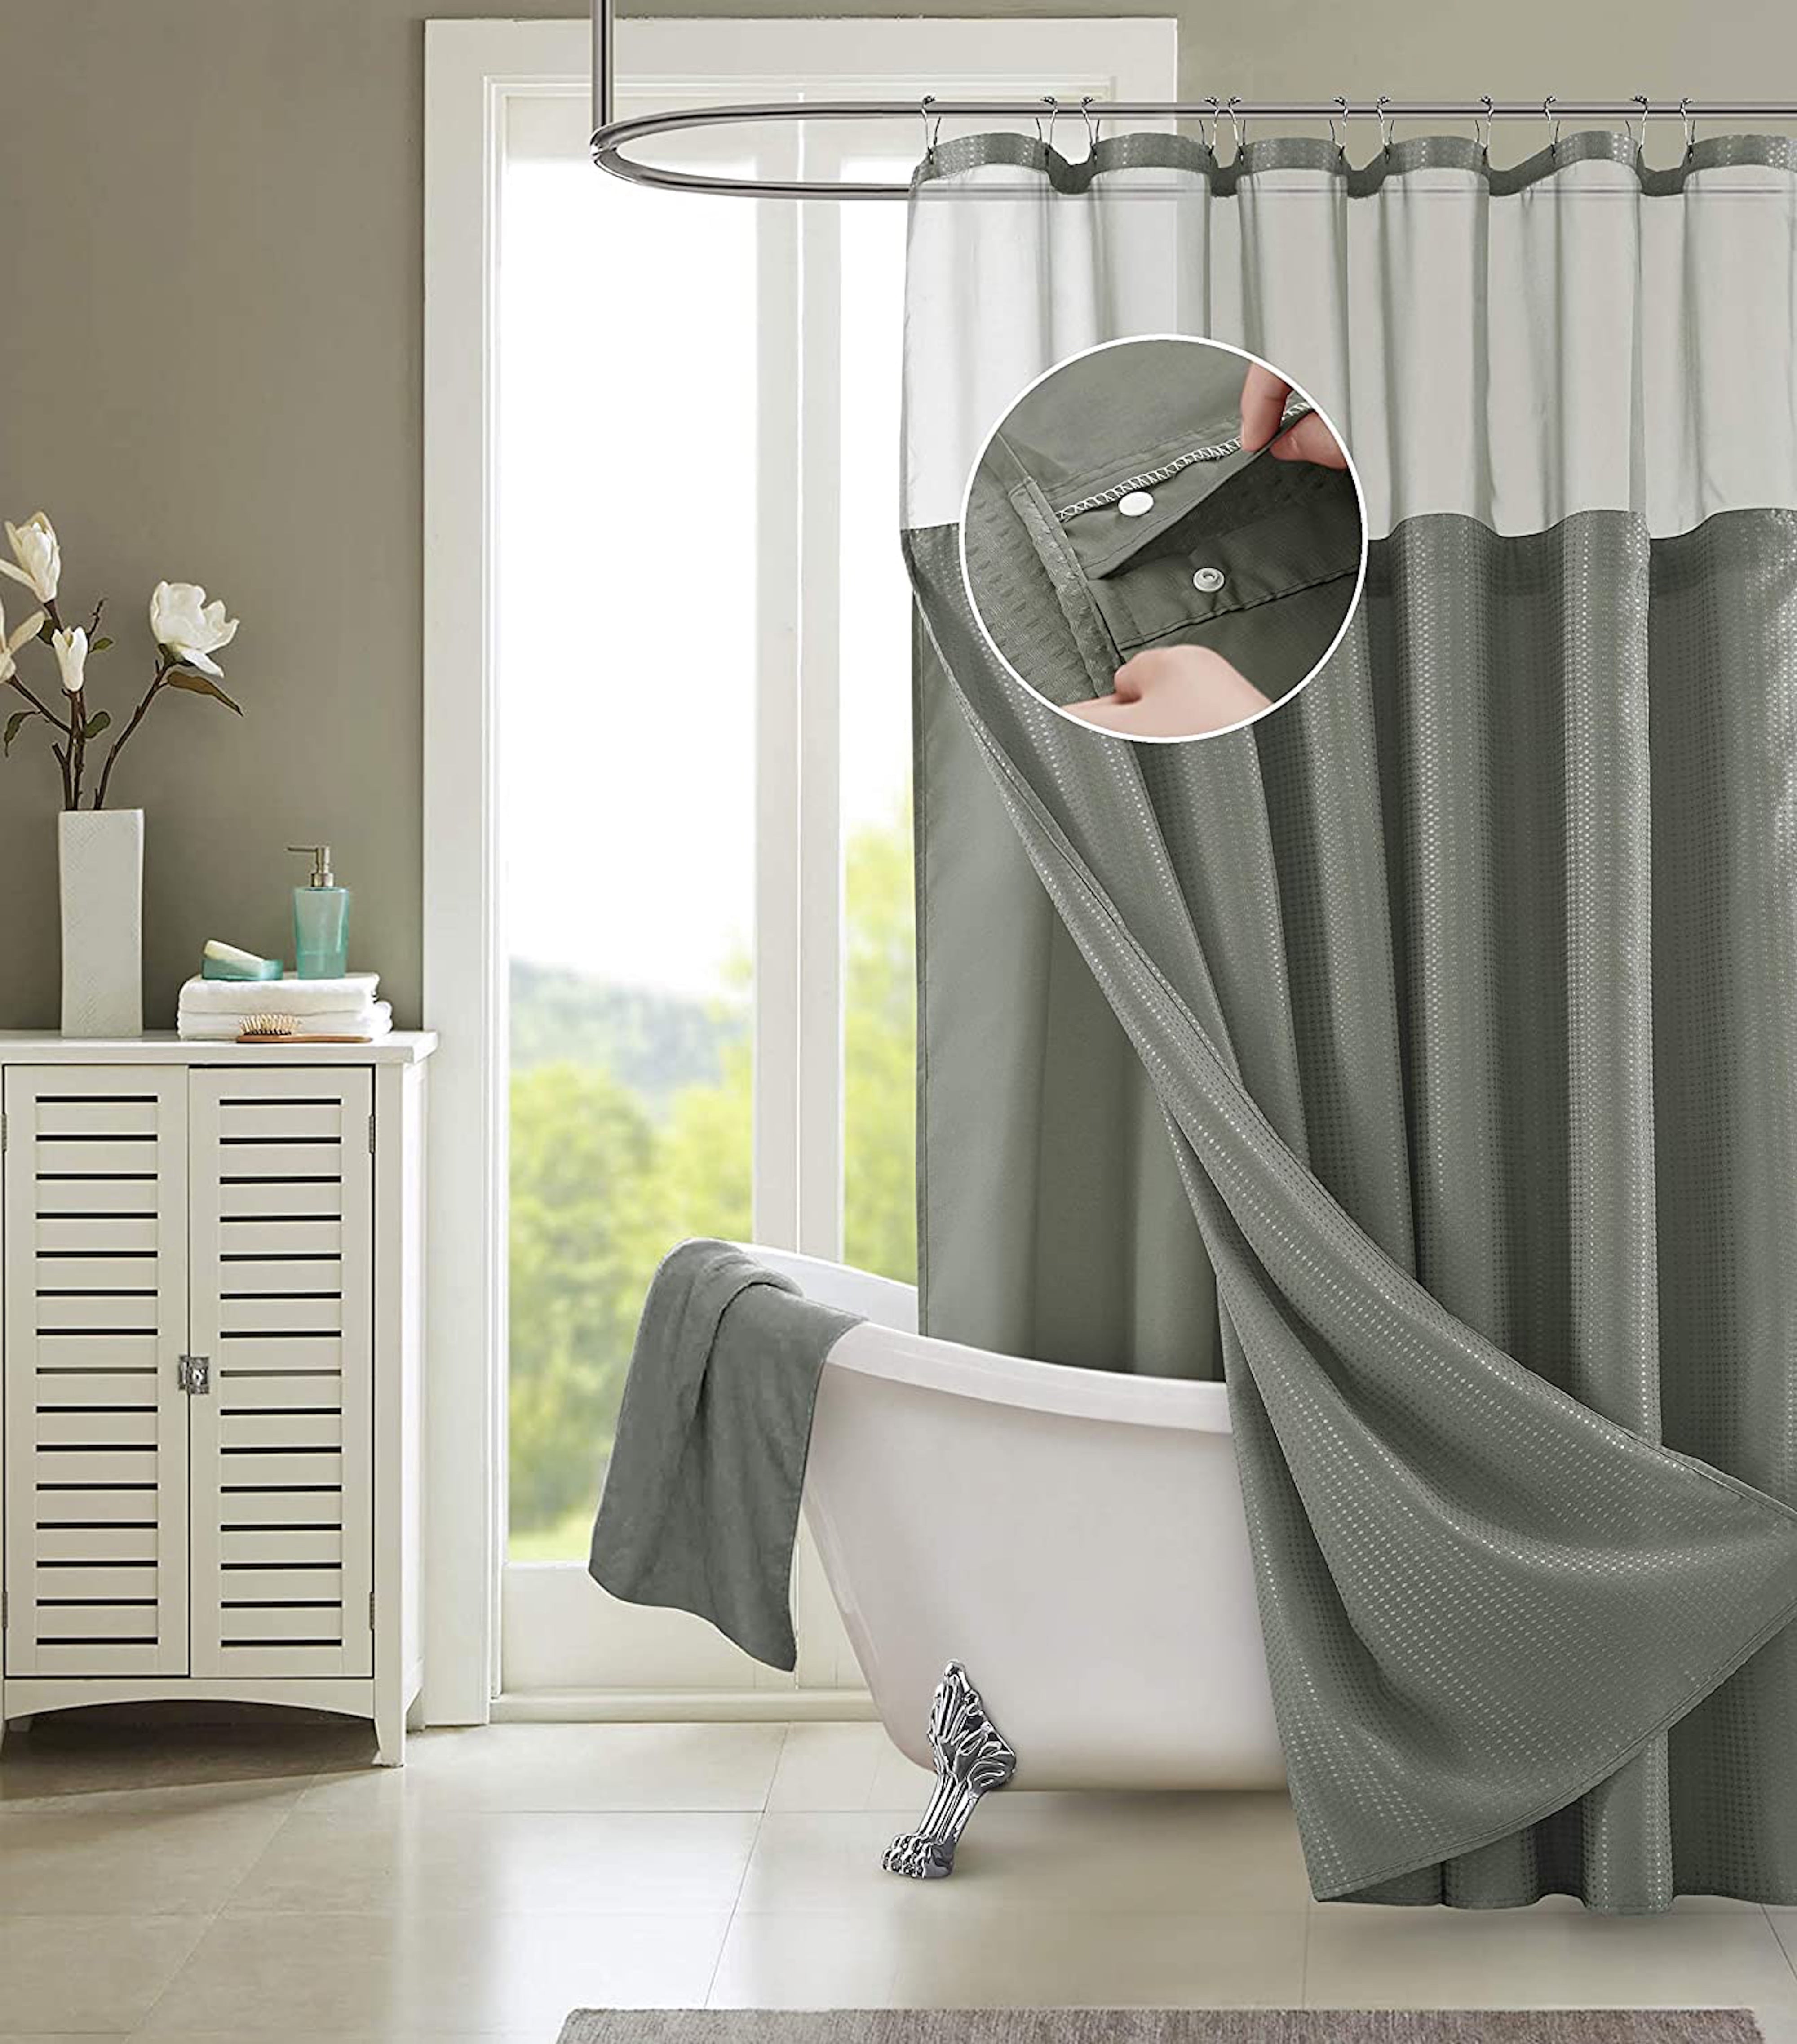 3D Parrot Bathroom Shower Curtain Waterproof Bath Mat Toilet Cover Rug Decor Set 